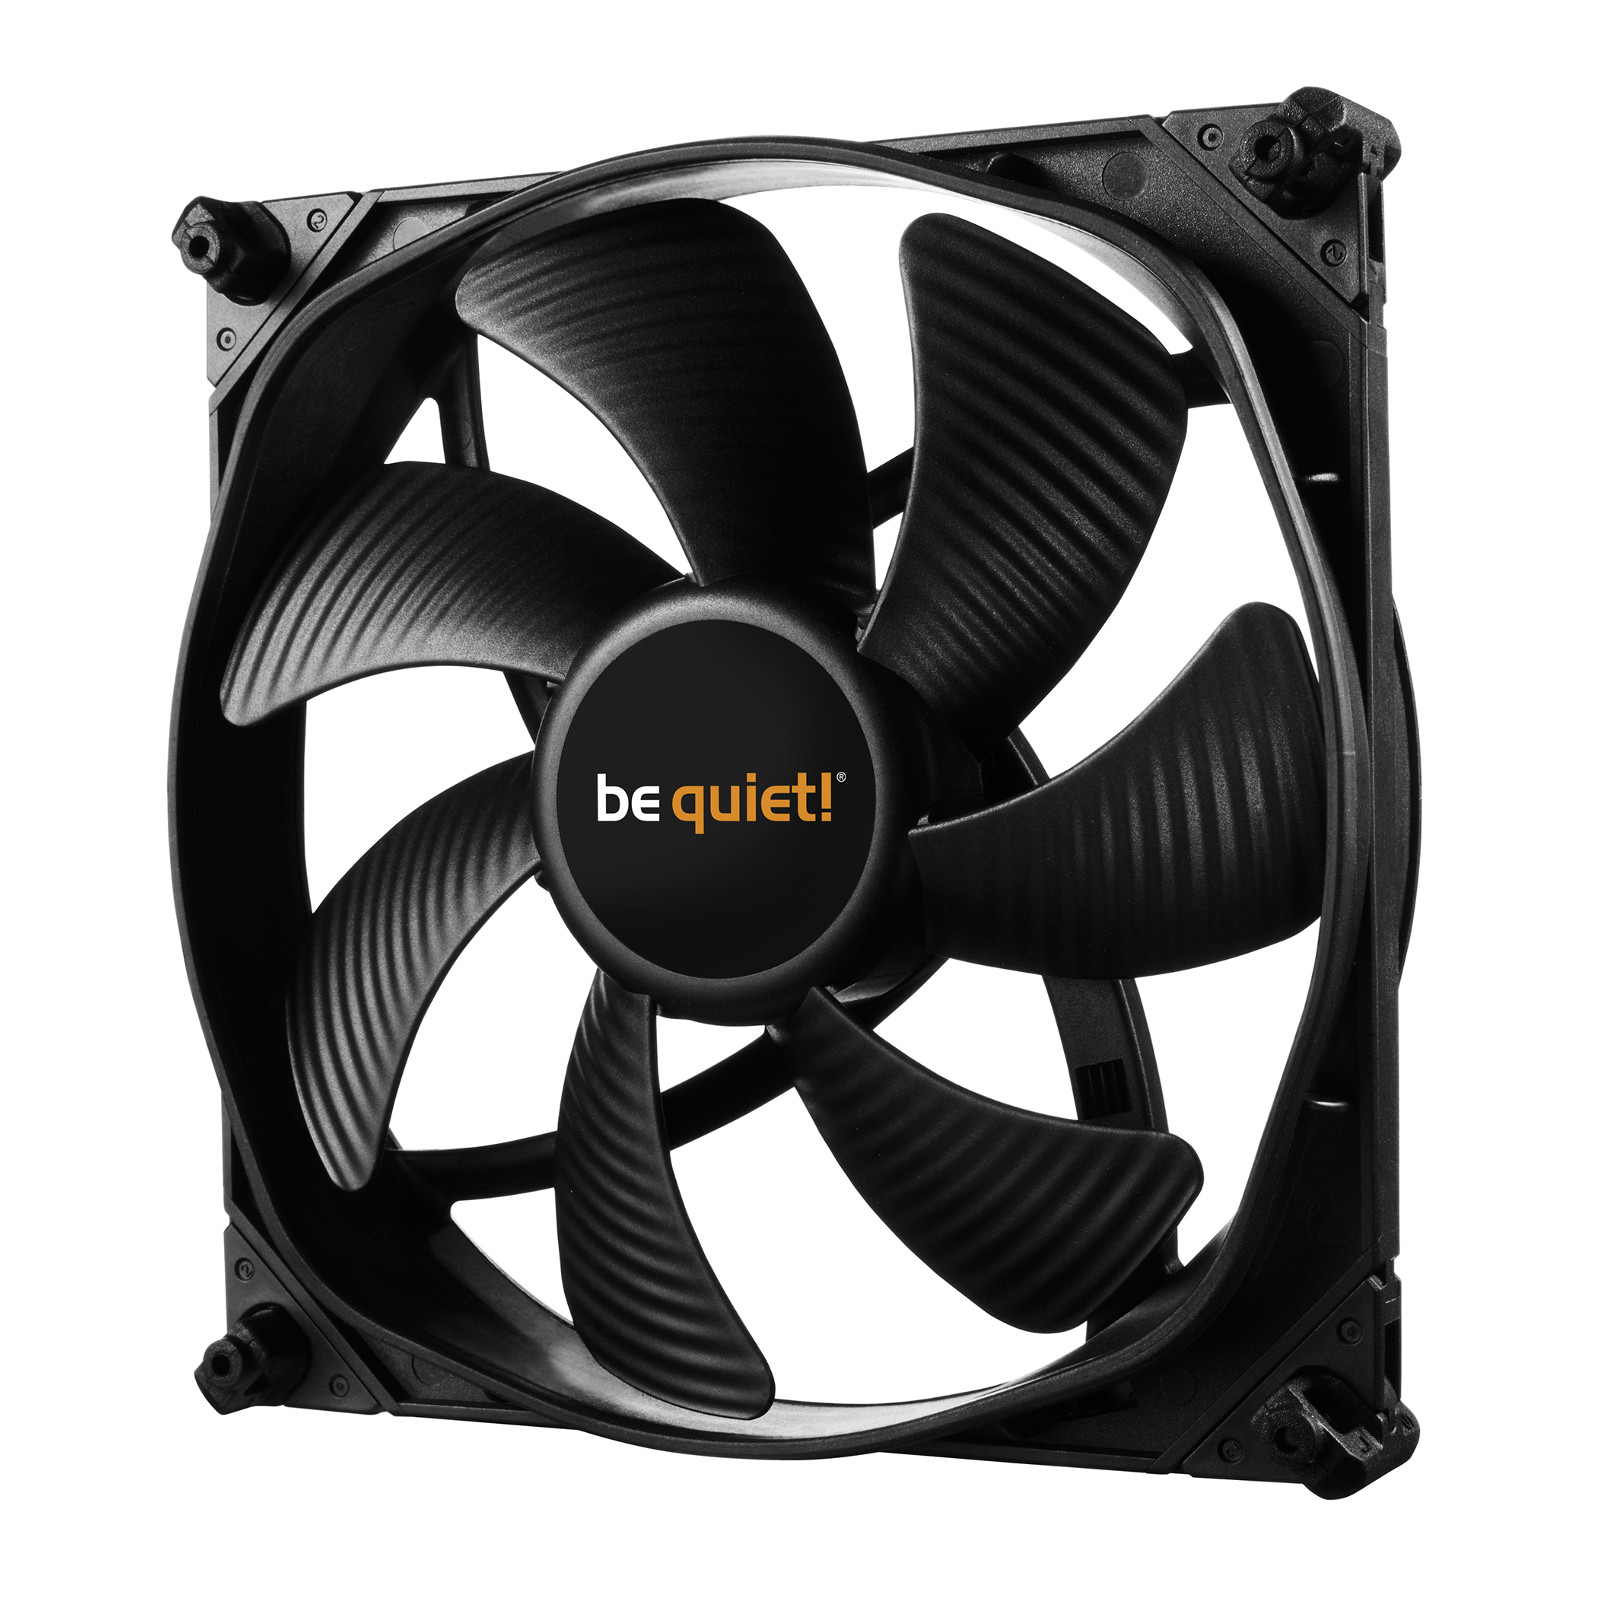 be quiet! - be quiet! Silent Wings 3 120mm Fan